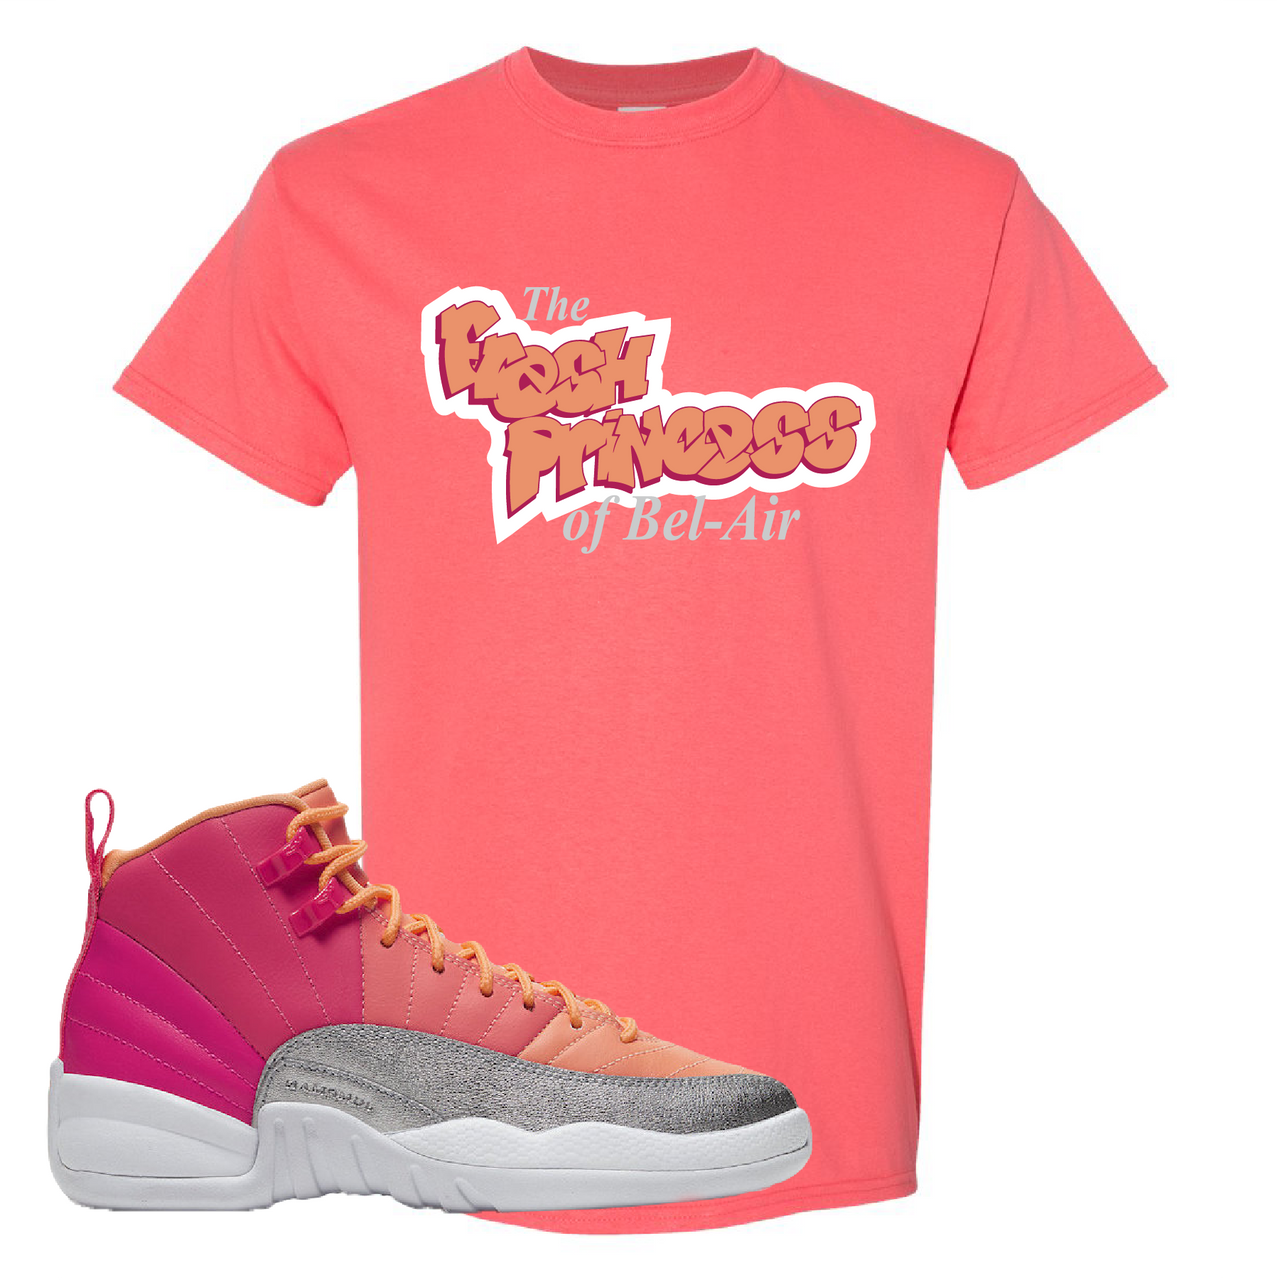 Air Jordan 12 GS Hot Punch Fresh Princess of Bel Air Classic Pink Sneaker Matching Crewneck Sweatshirt